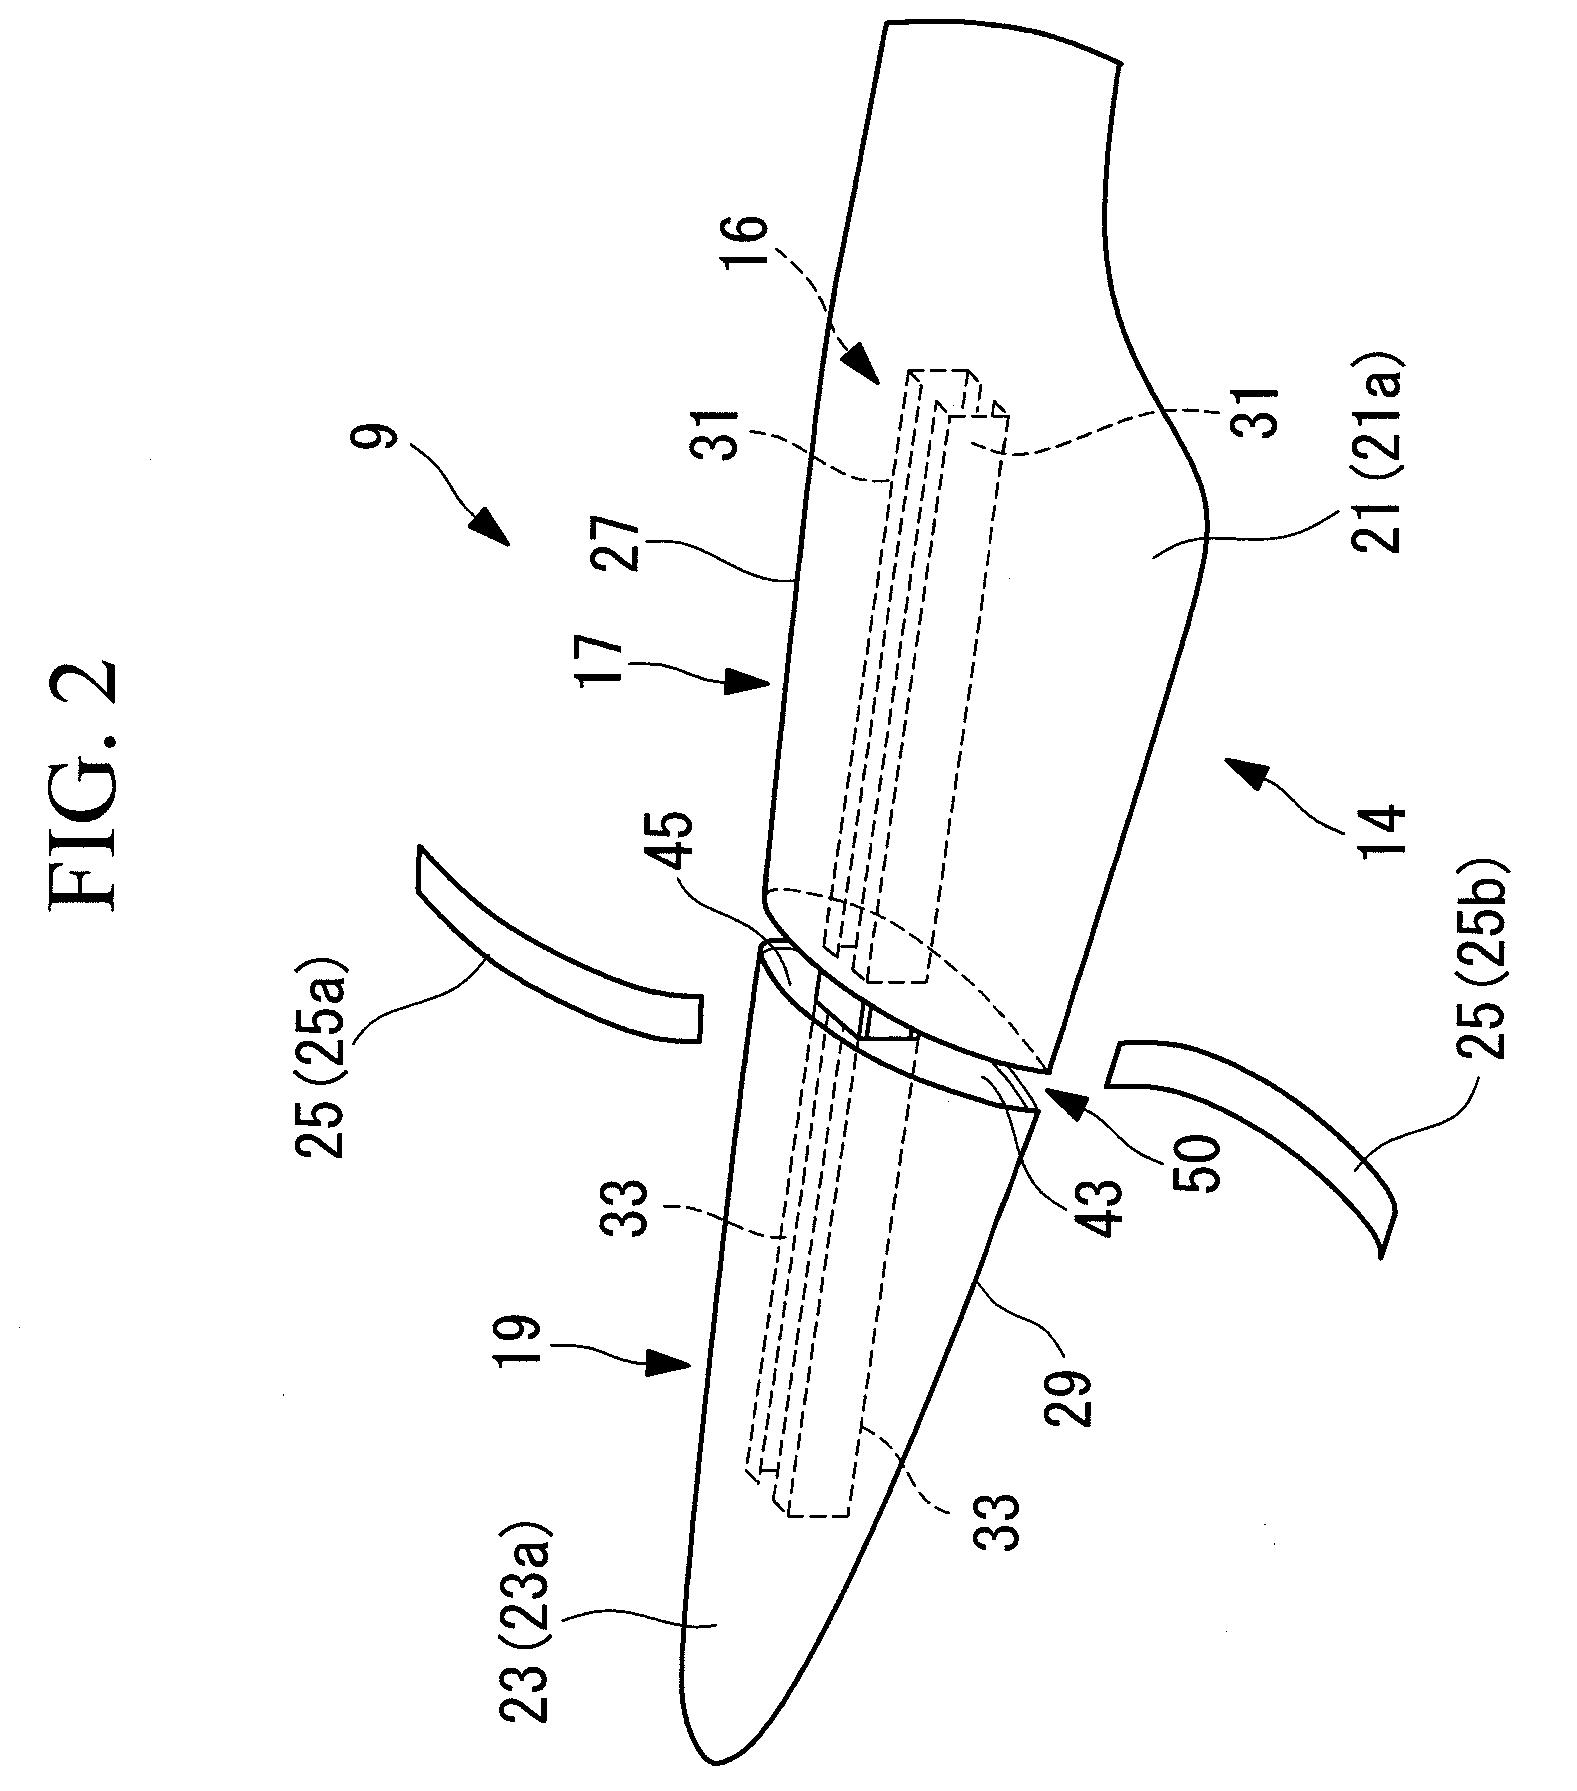 Wind-turbine blade